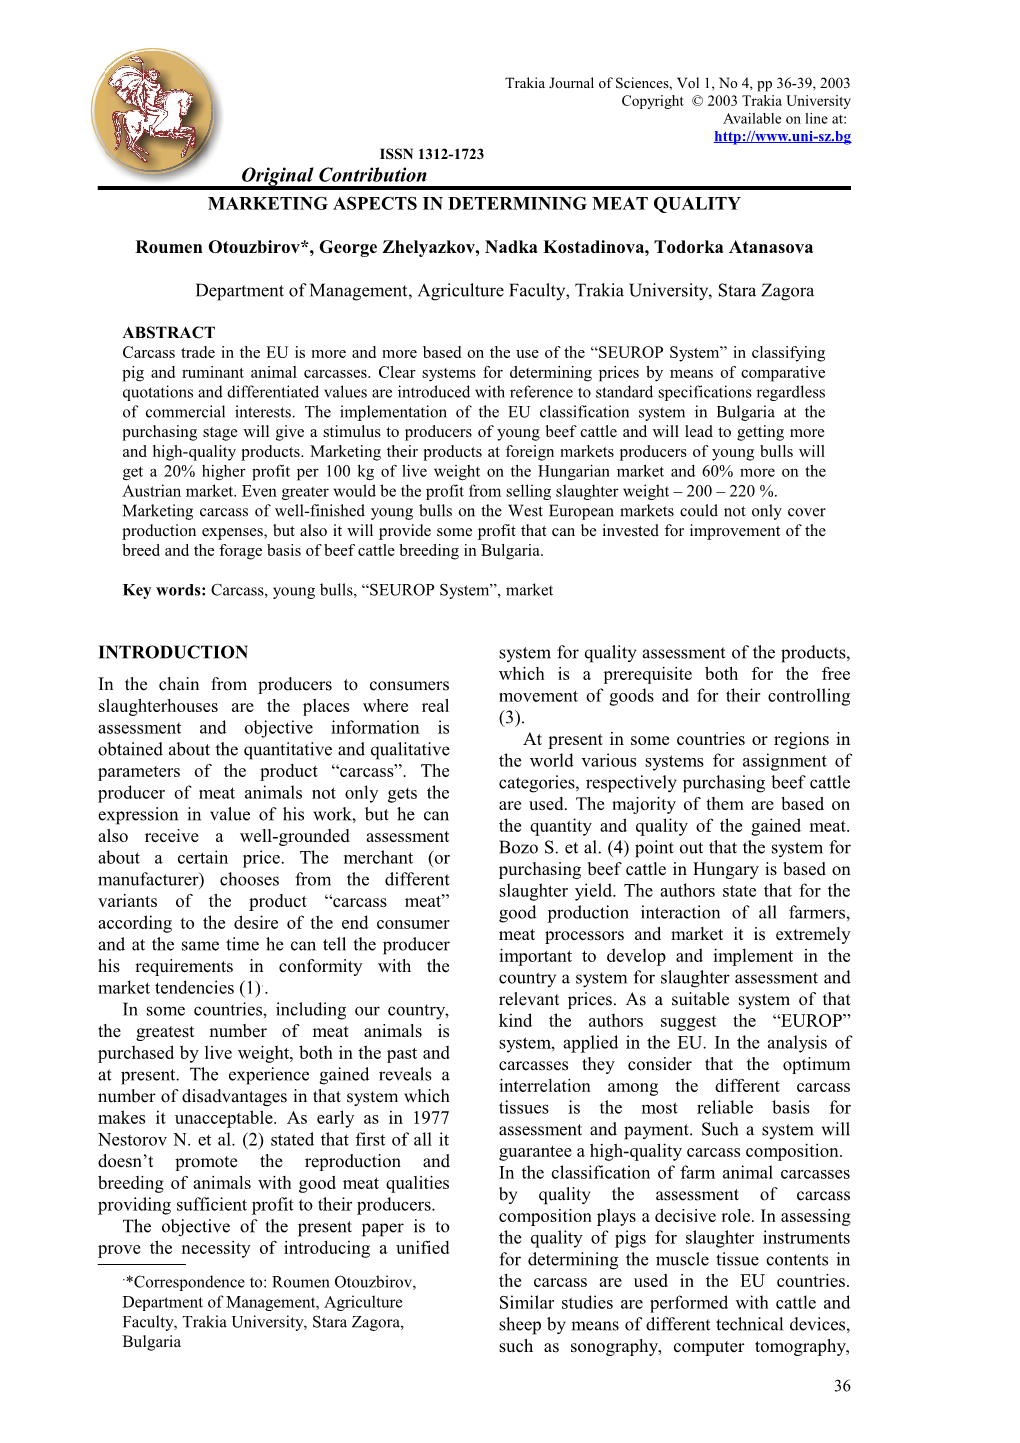 Trakia Journal of Sciences, Vol 1, No 4, Pp 36-39, 2003